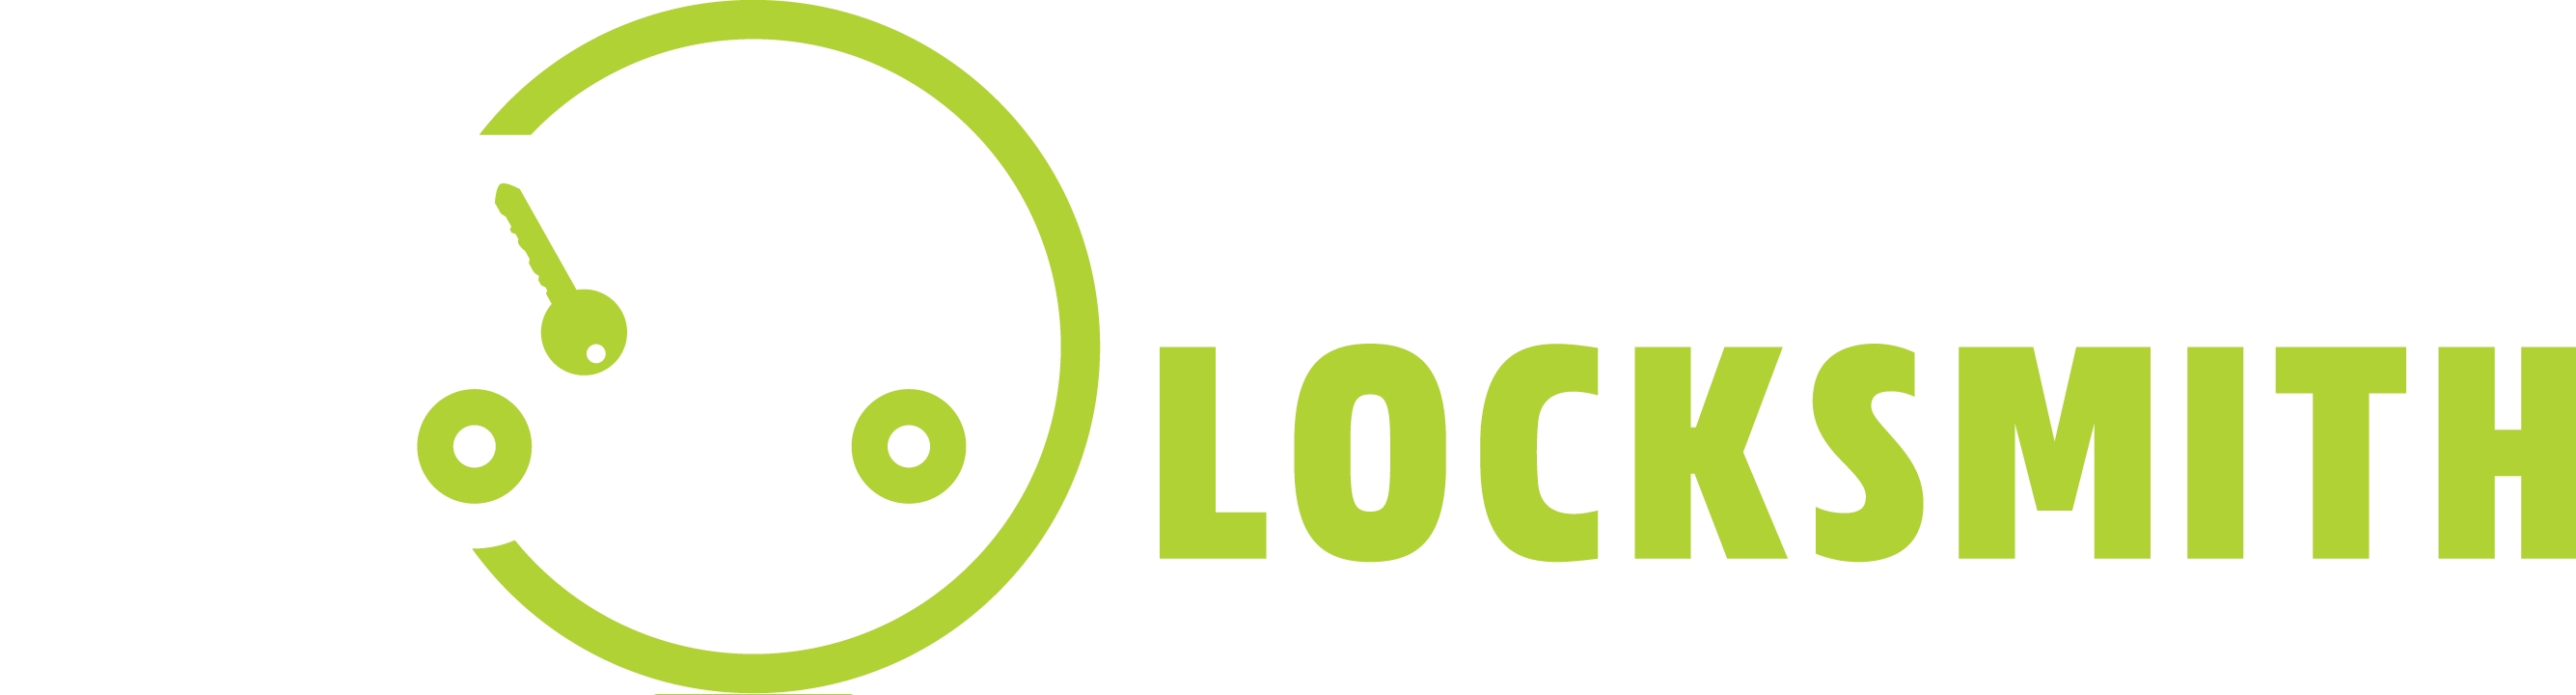 Texas Premier Locksmith